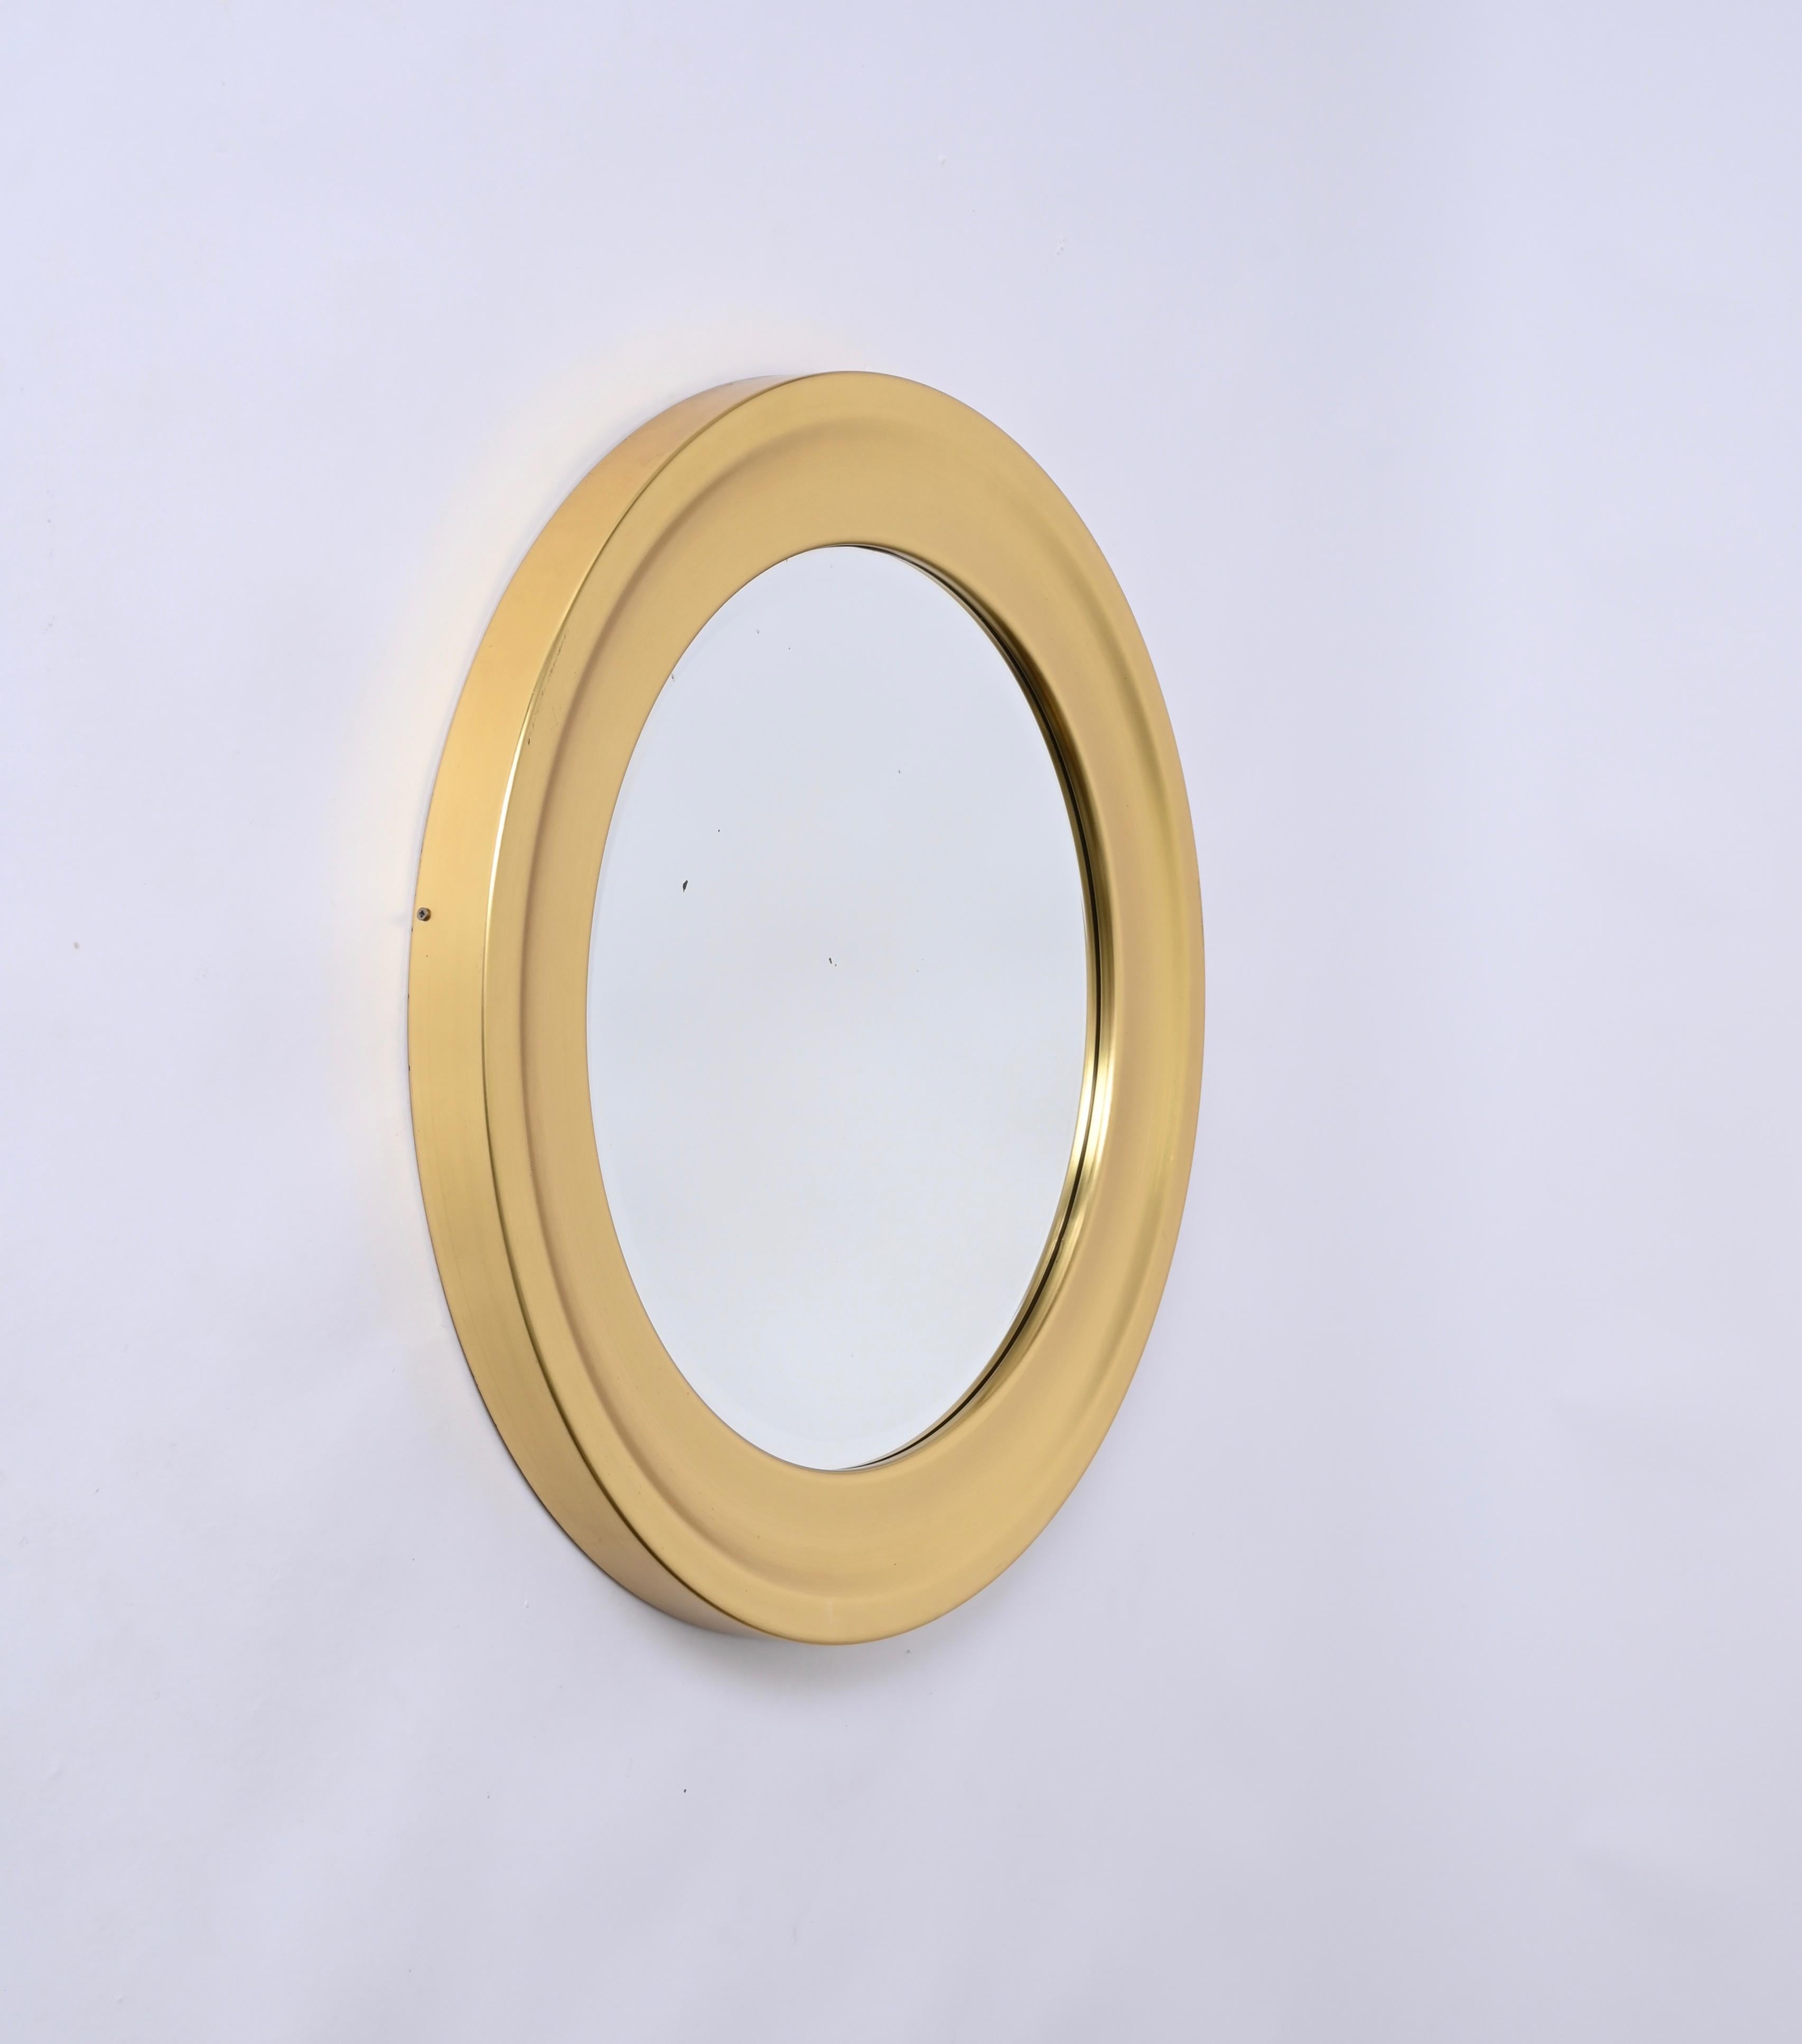 Sergio Mazza Midcentury Golden Aluminum Round Mirror for Artemide, Italy 1960s For Sale 5